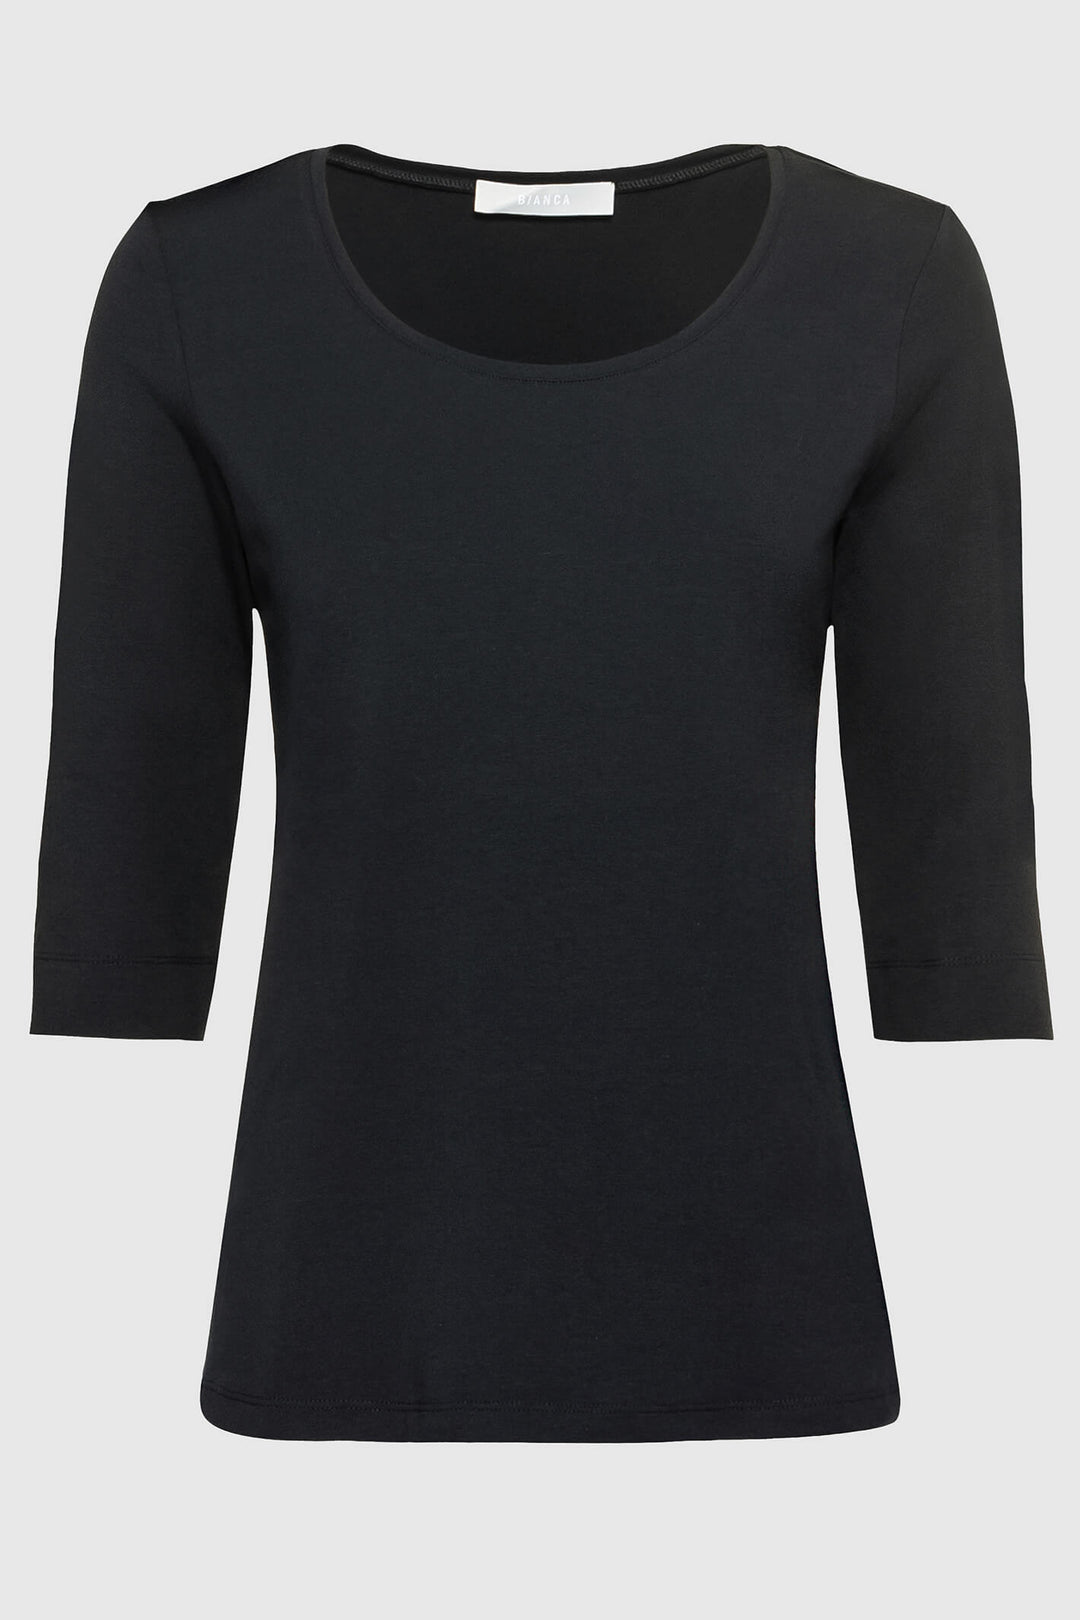 Bianca 6235 Diella Black Three-Quarter Sleeve T-Shirt - Dotique